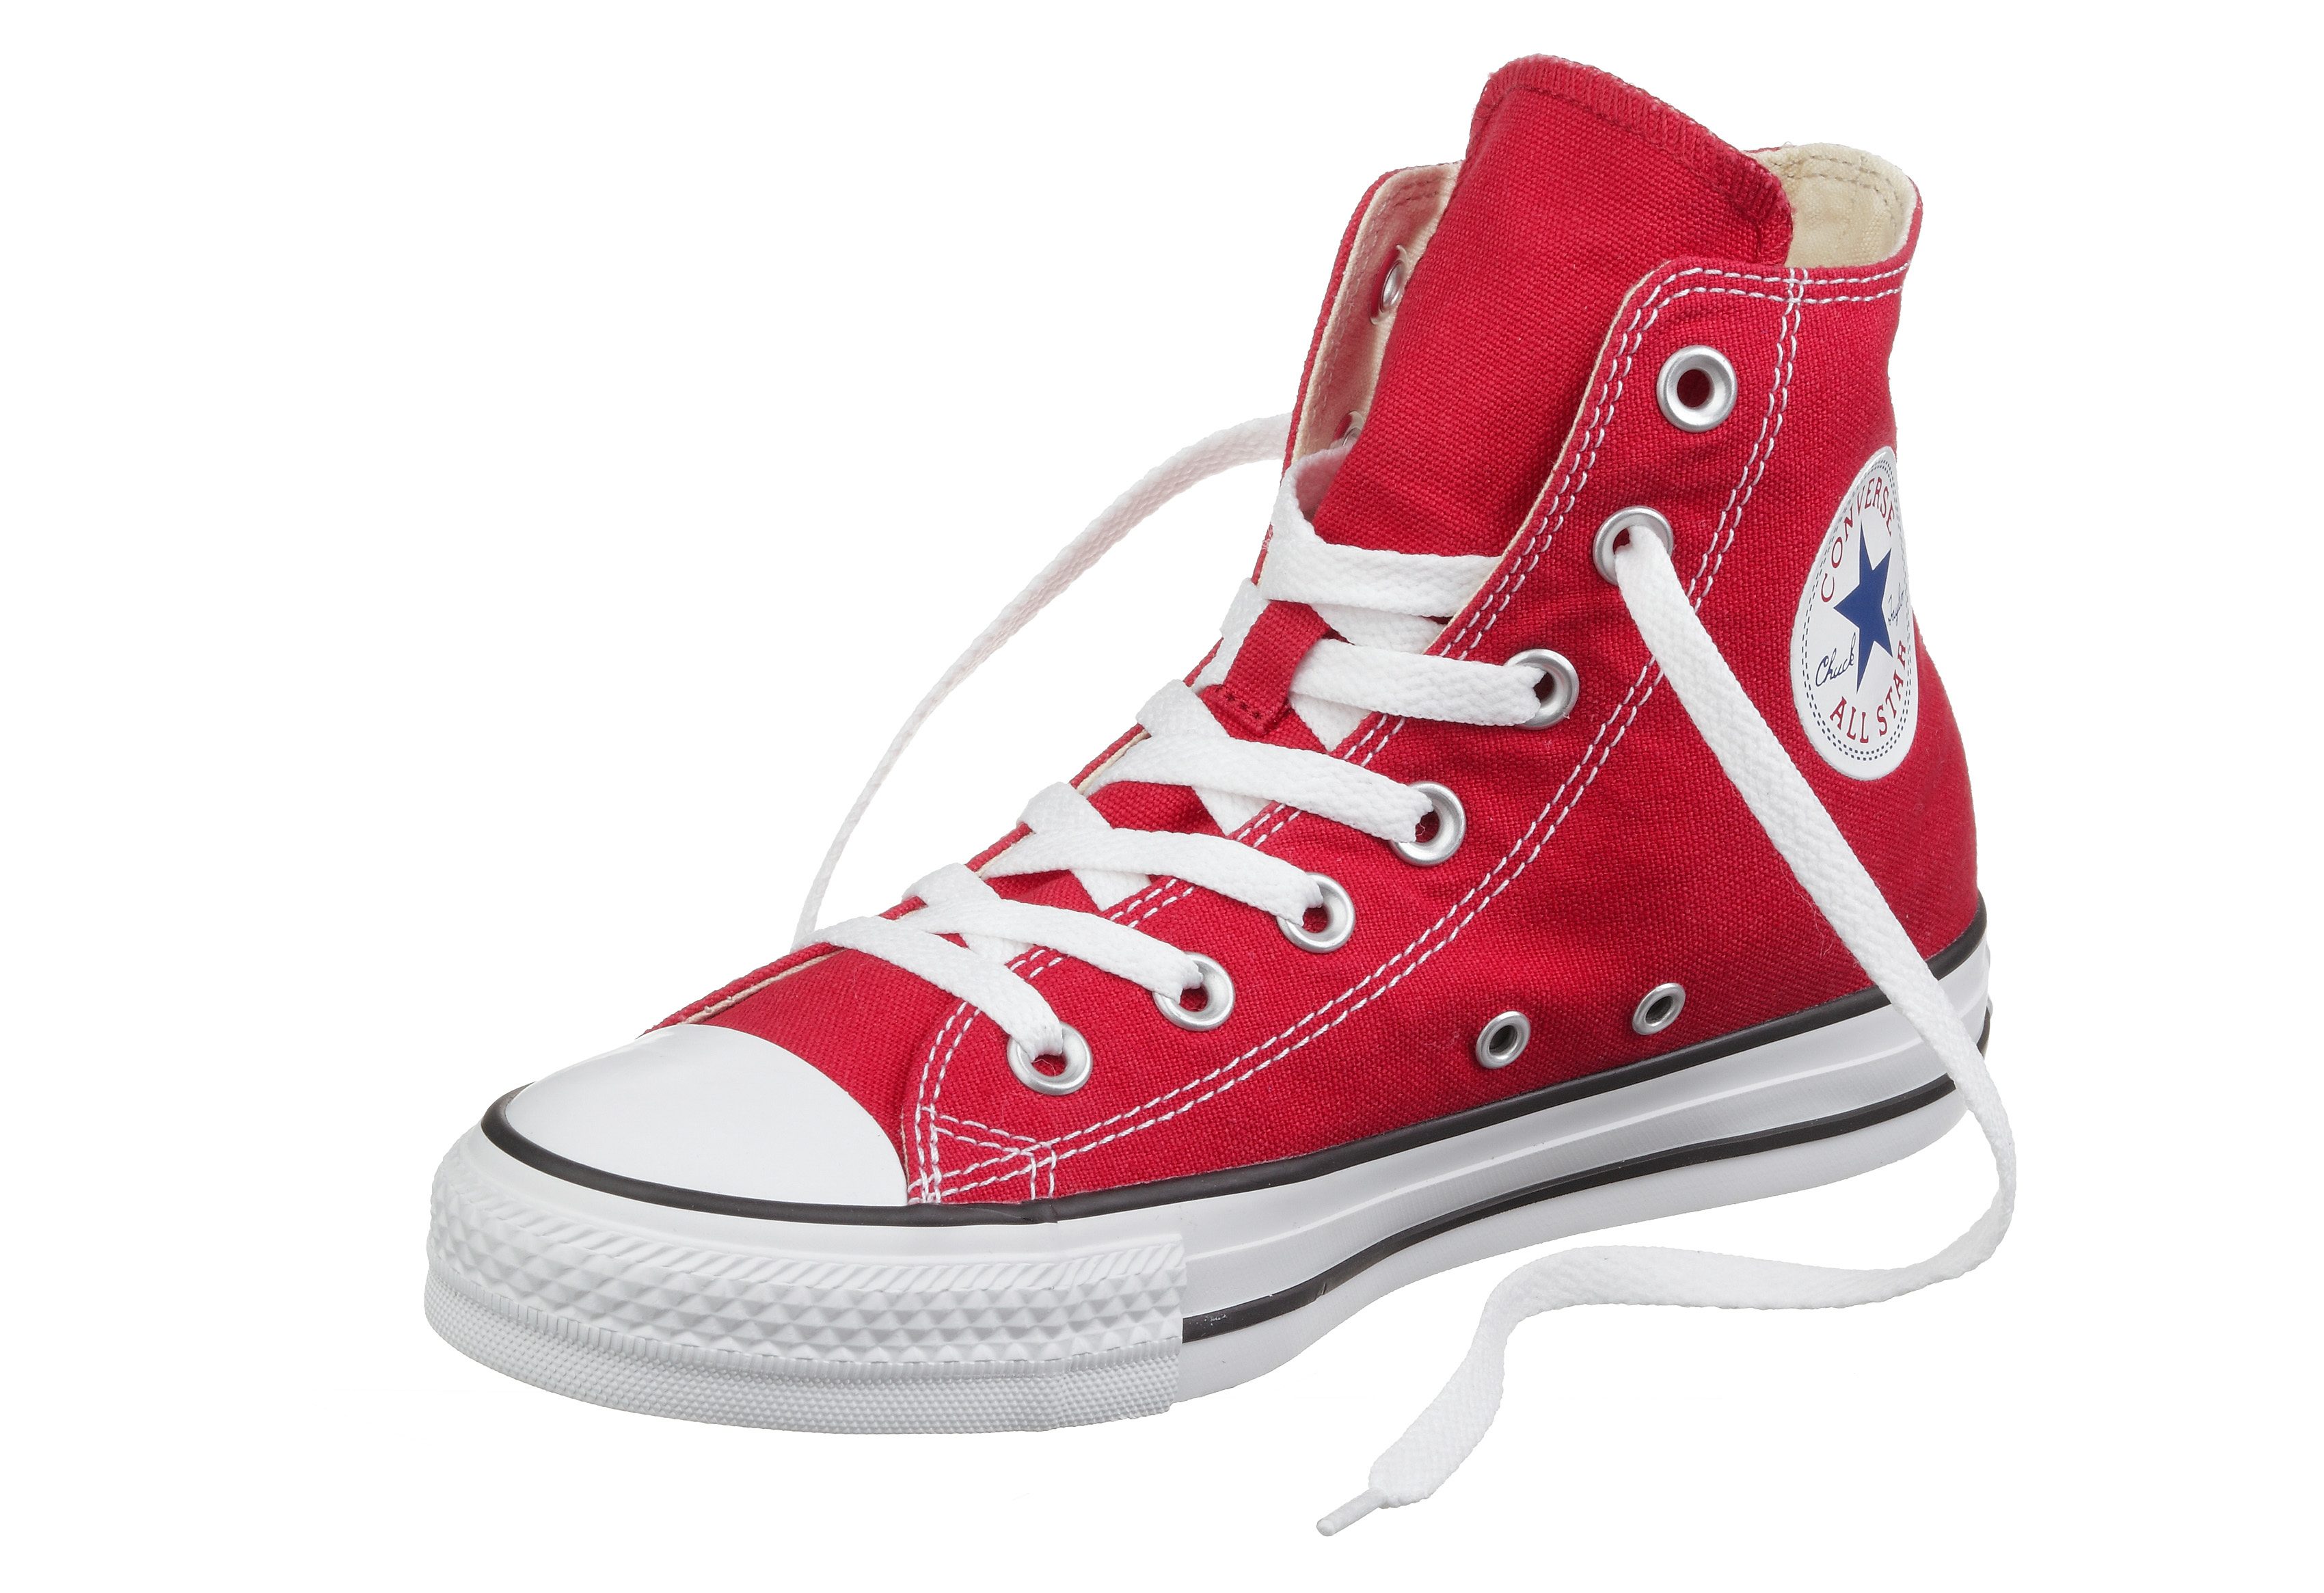 Converse »Chuck Taylor All Star Hi« Sneaker kaufen | OTTO